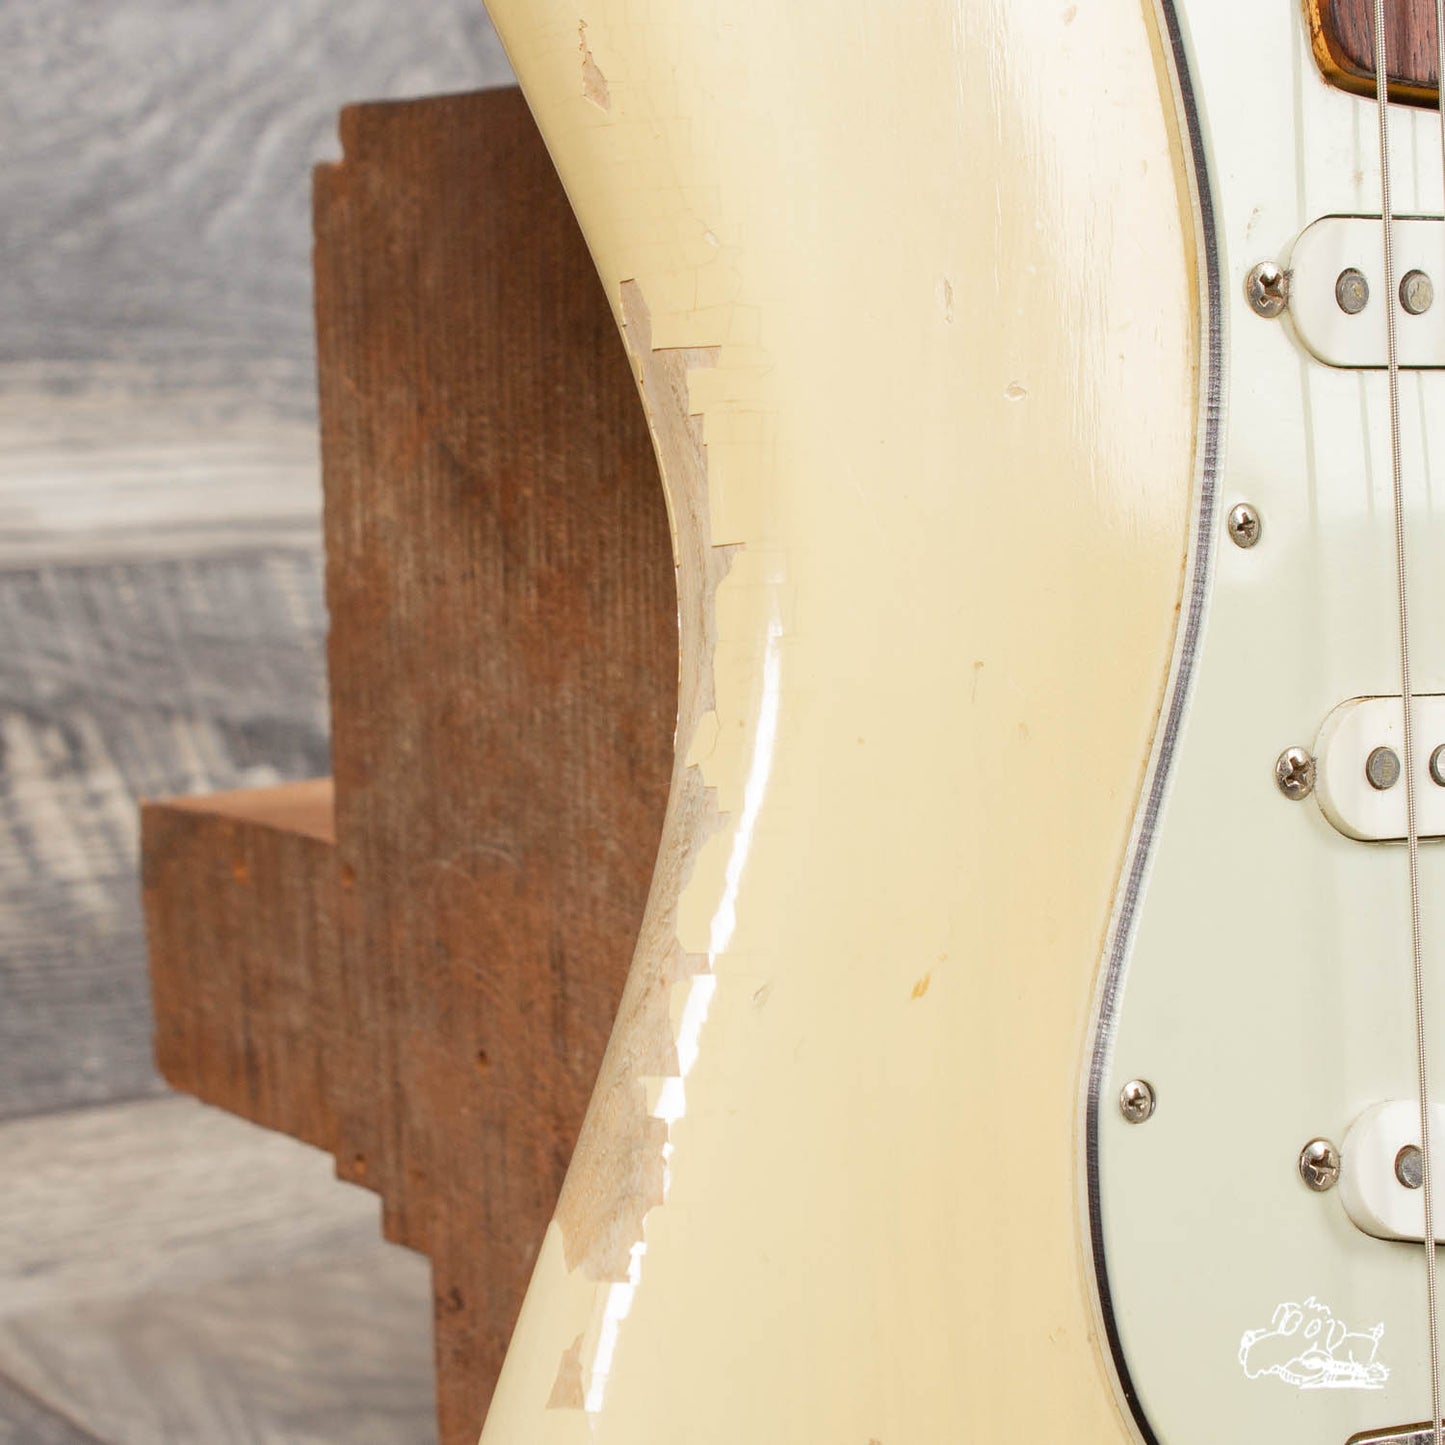 1963 Fender Stratocaster - Blonde